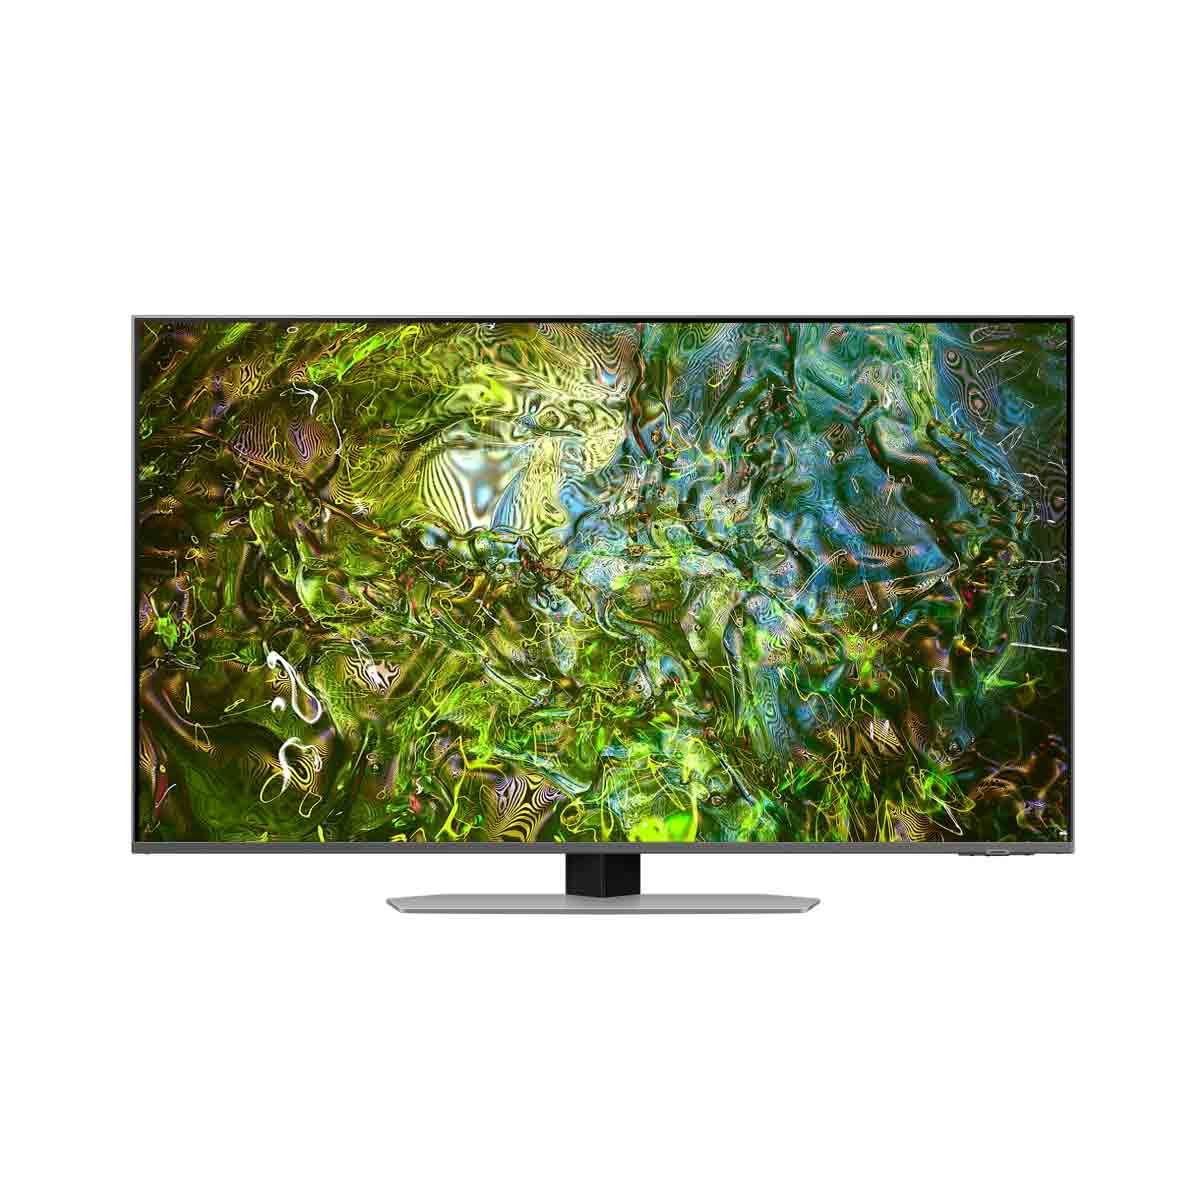 SAMSUNG Neo QLED 4K Smart TV รุ่น QA43QN90DAKXXT Series QN90D 144Hz สมาร์ททีวี ขนาด 43 นิ้ว